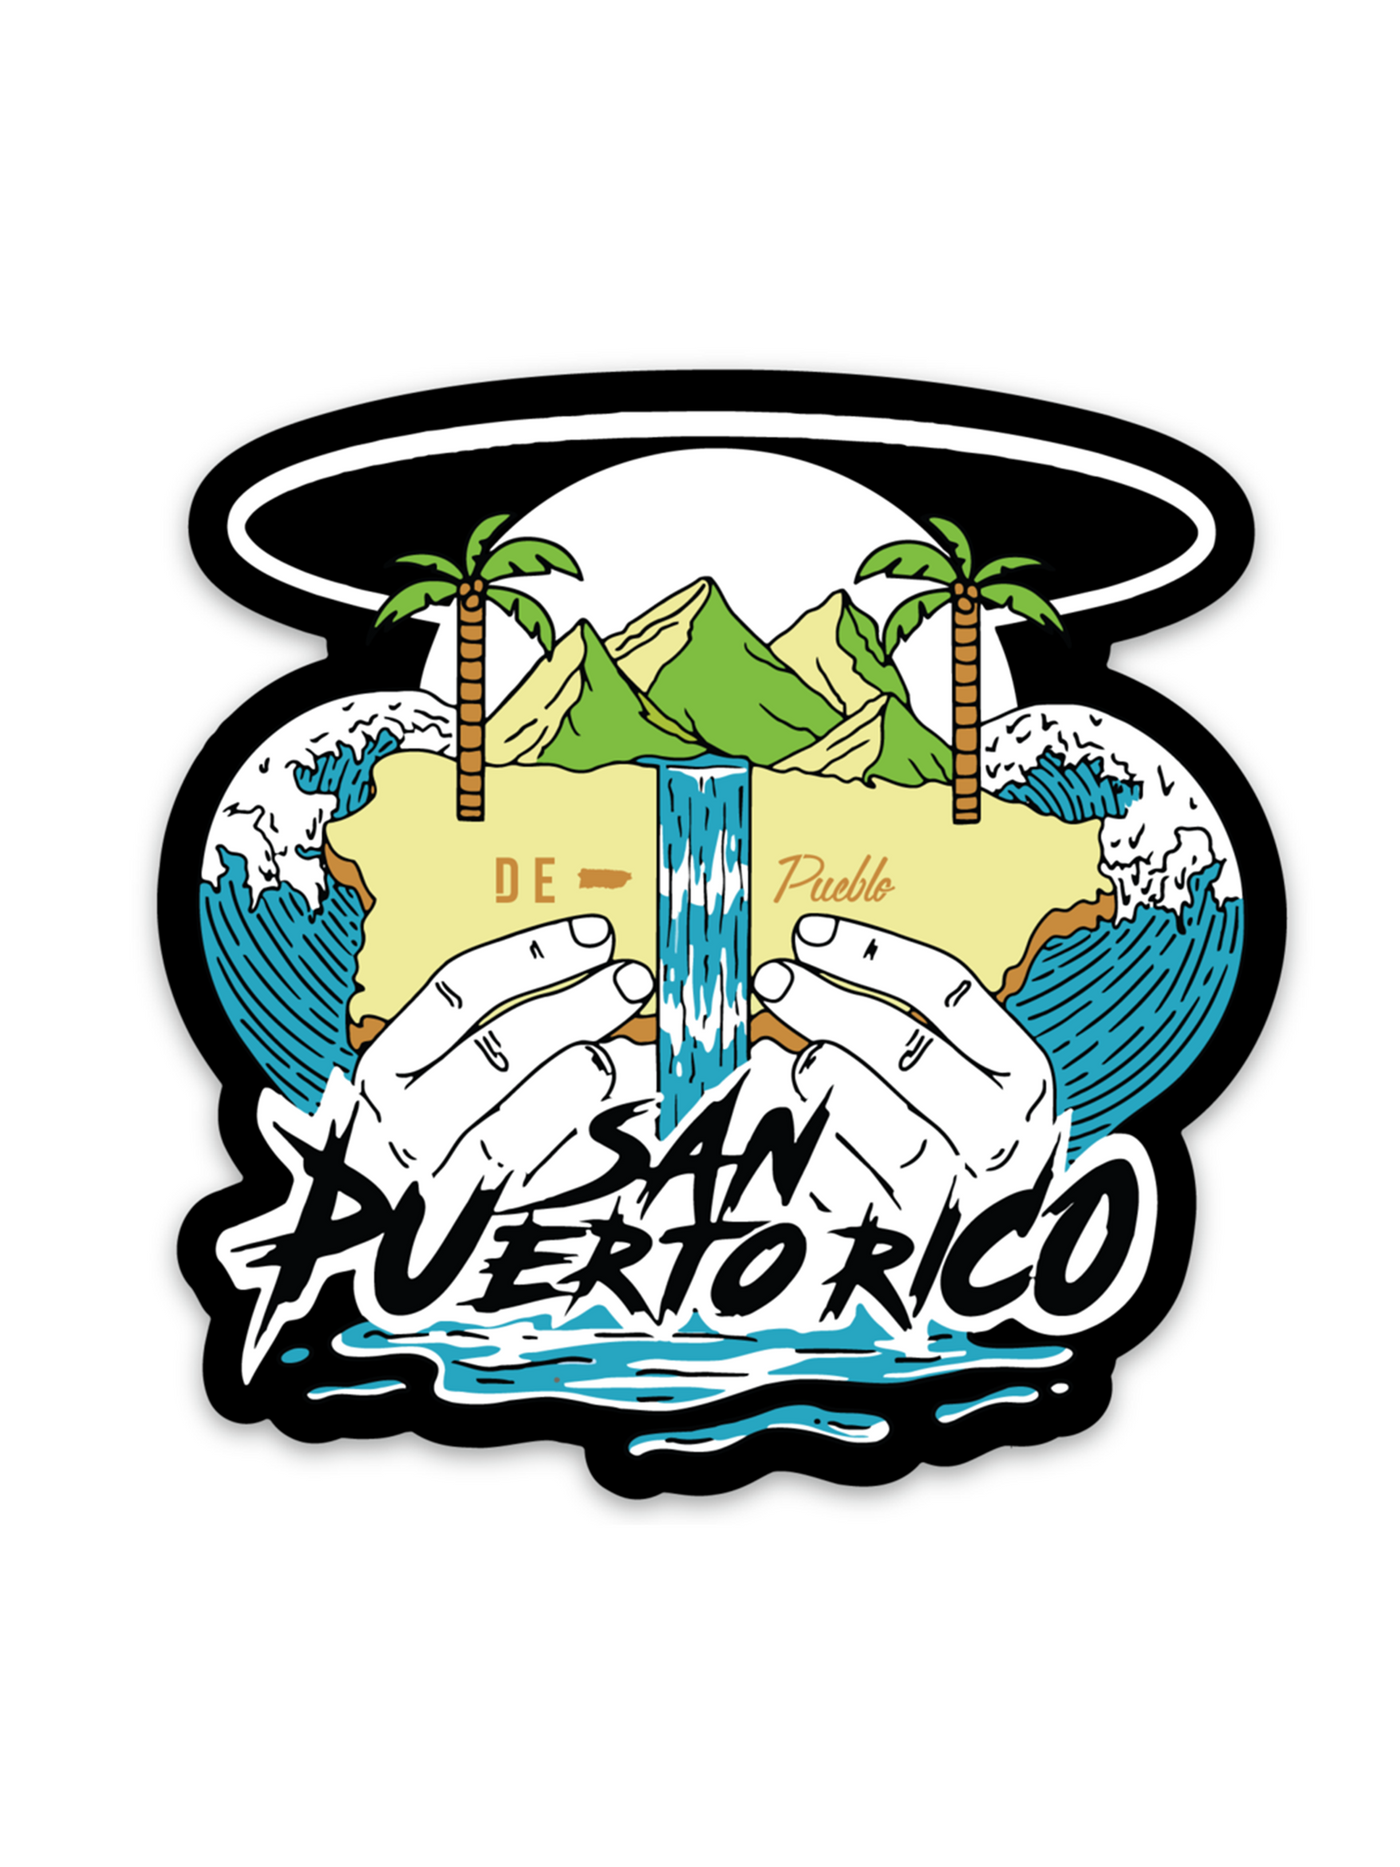 San Puerto Rico - Sticker